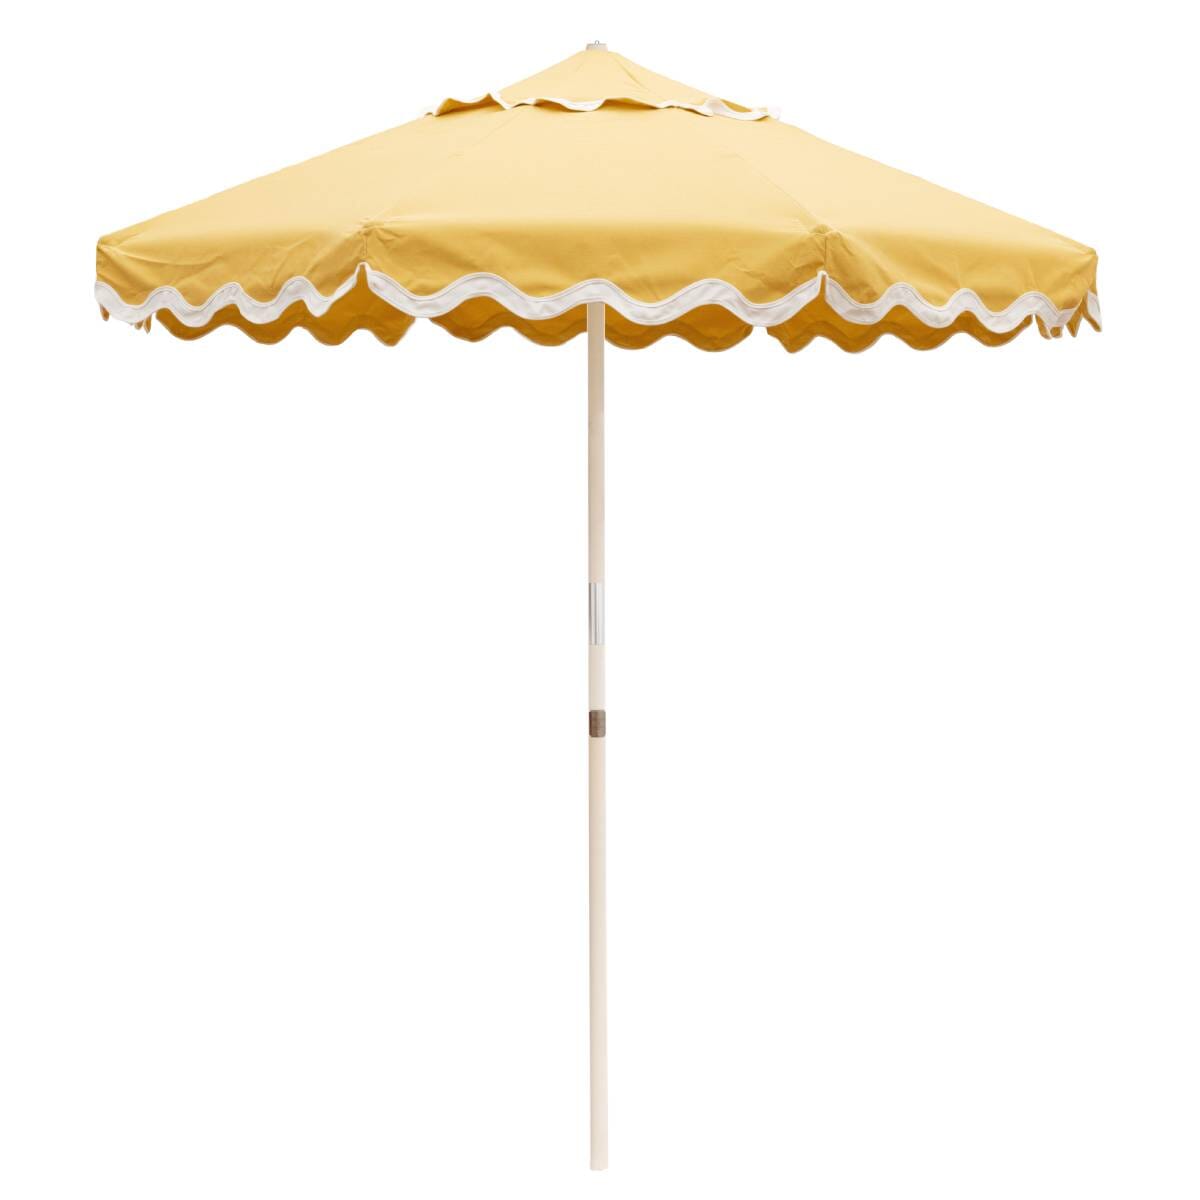 The Market Umbrella - Rivie Mimosa Market Umbrella Business & Pleasure Co Aus 